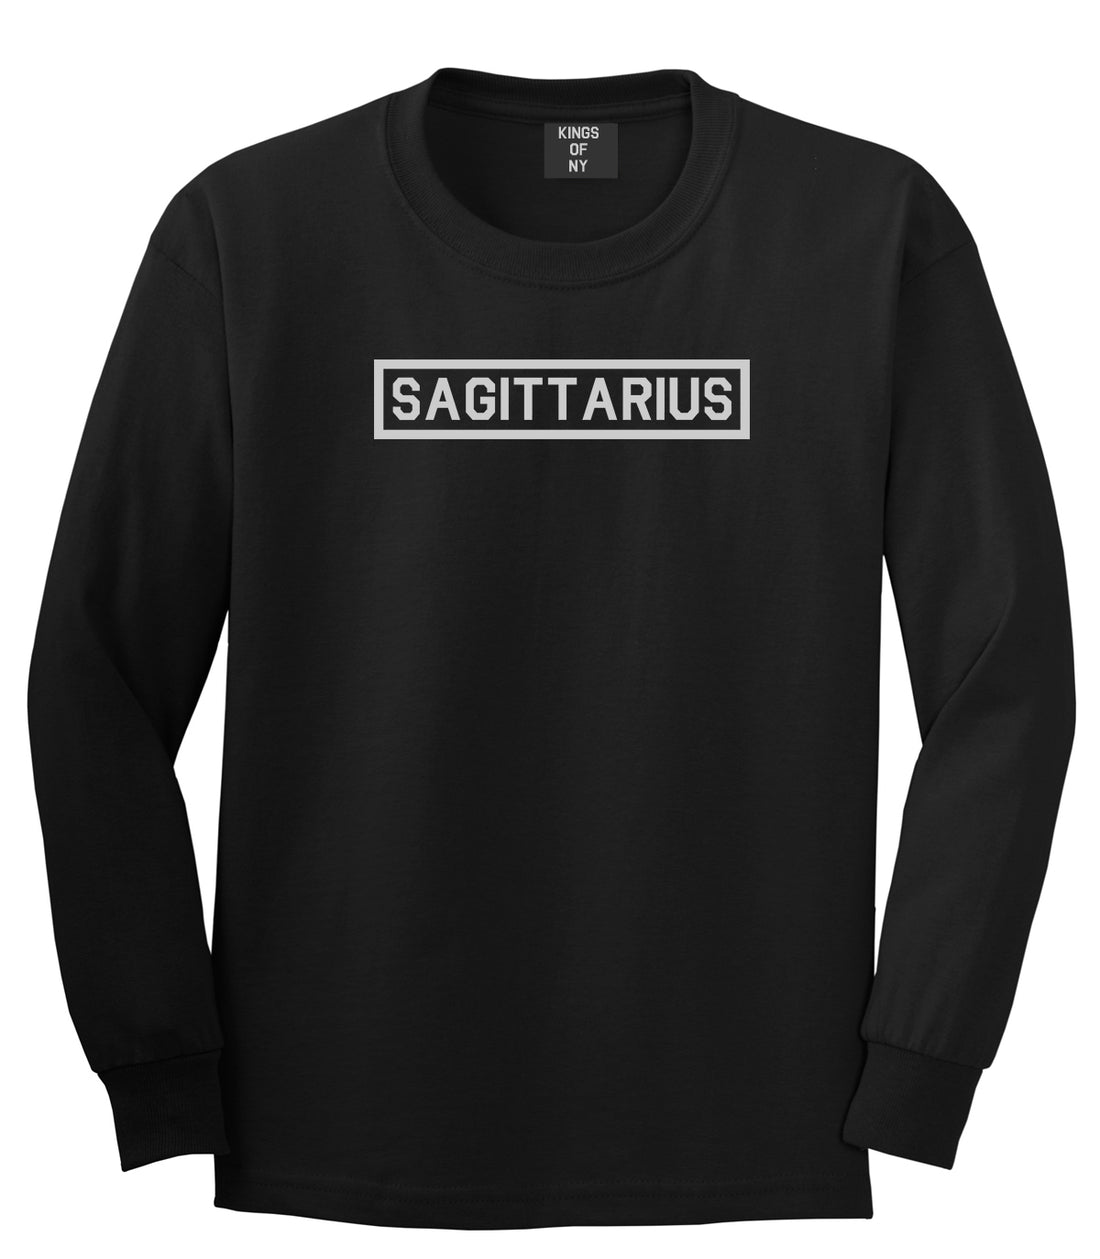 Sagittarius Horoscope Sign Mens Black Long Sleeve T-Shirt by KINGS OF NY